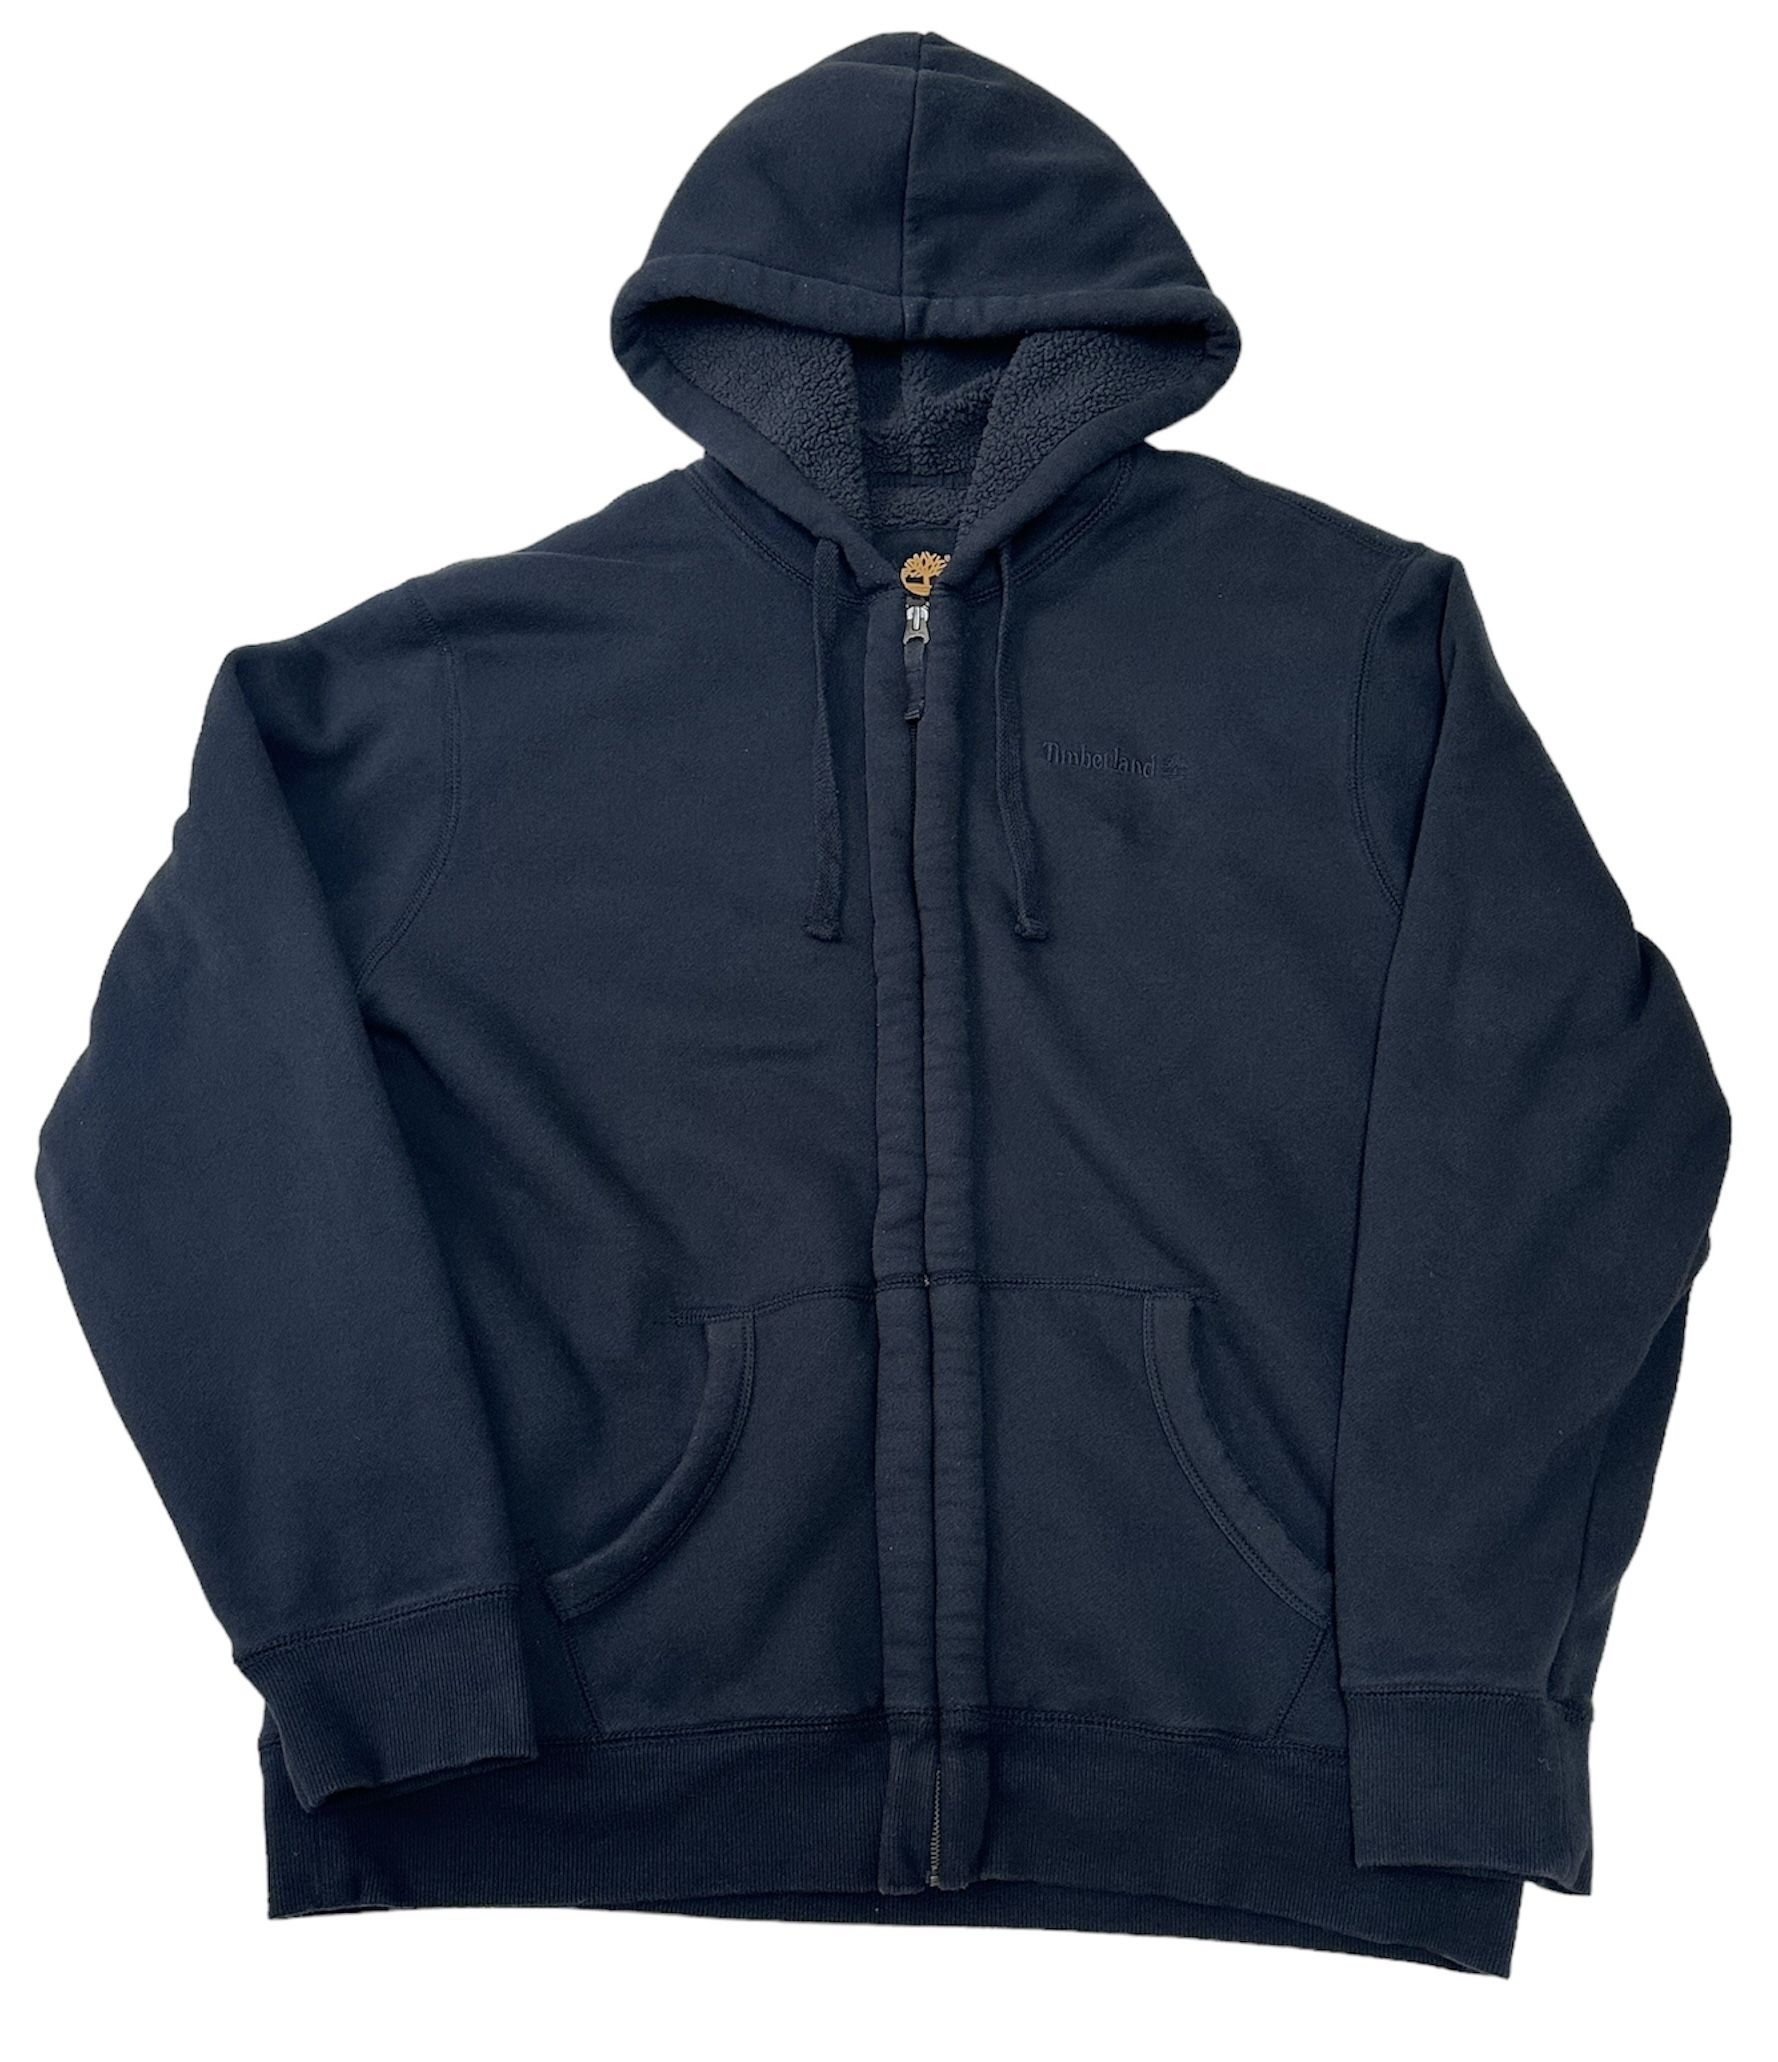 Timberland Men’s Vintage Black Hoodie Jacket Size XL